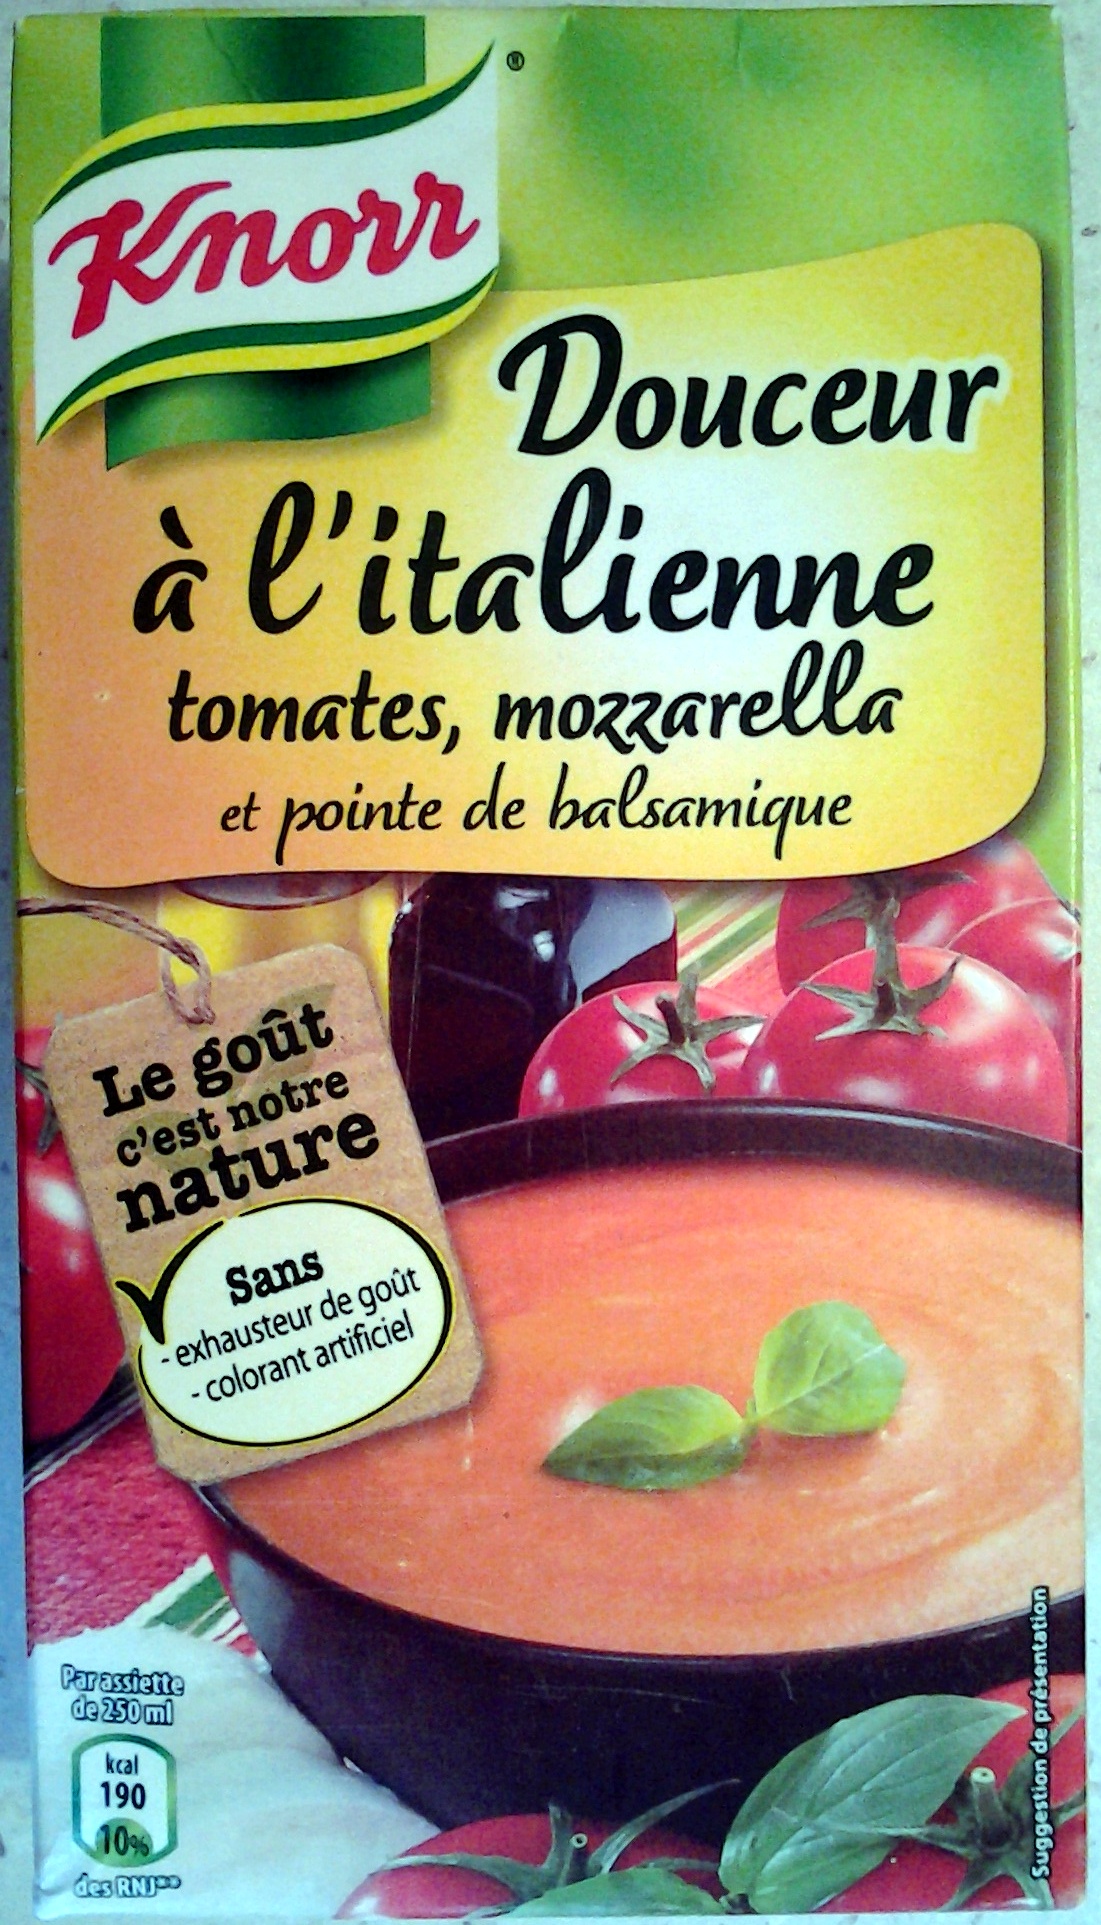 Knorr soupe douceur italienne - Product - fr